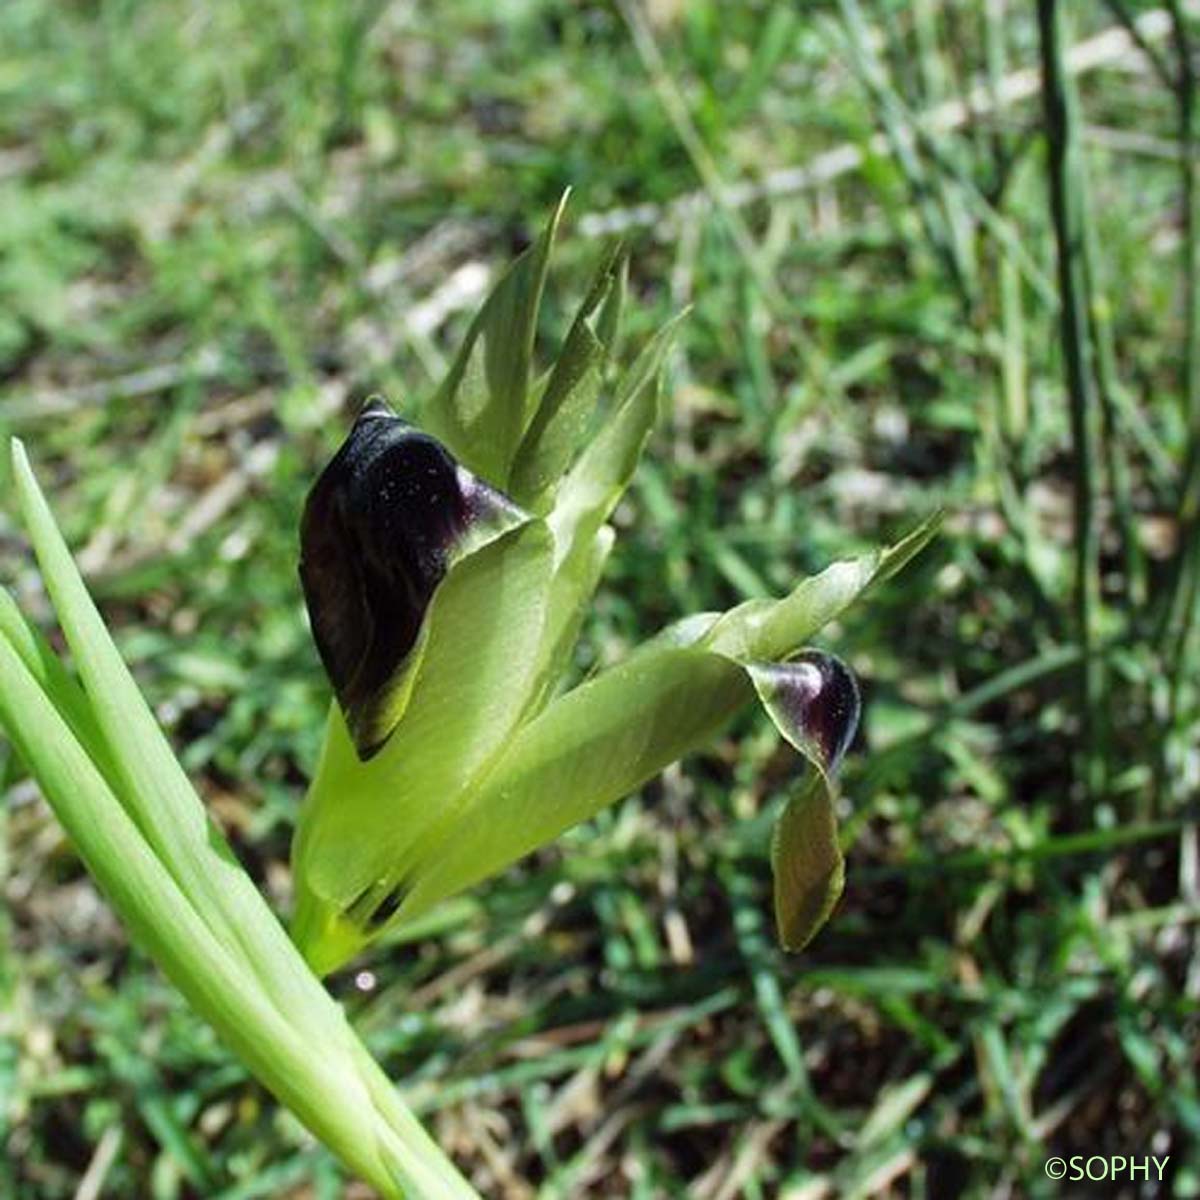 Iris des serpents - Iris tuberosa